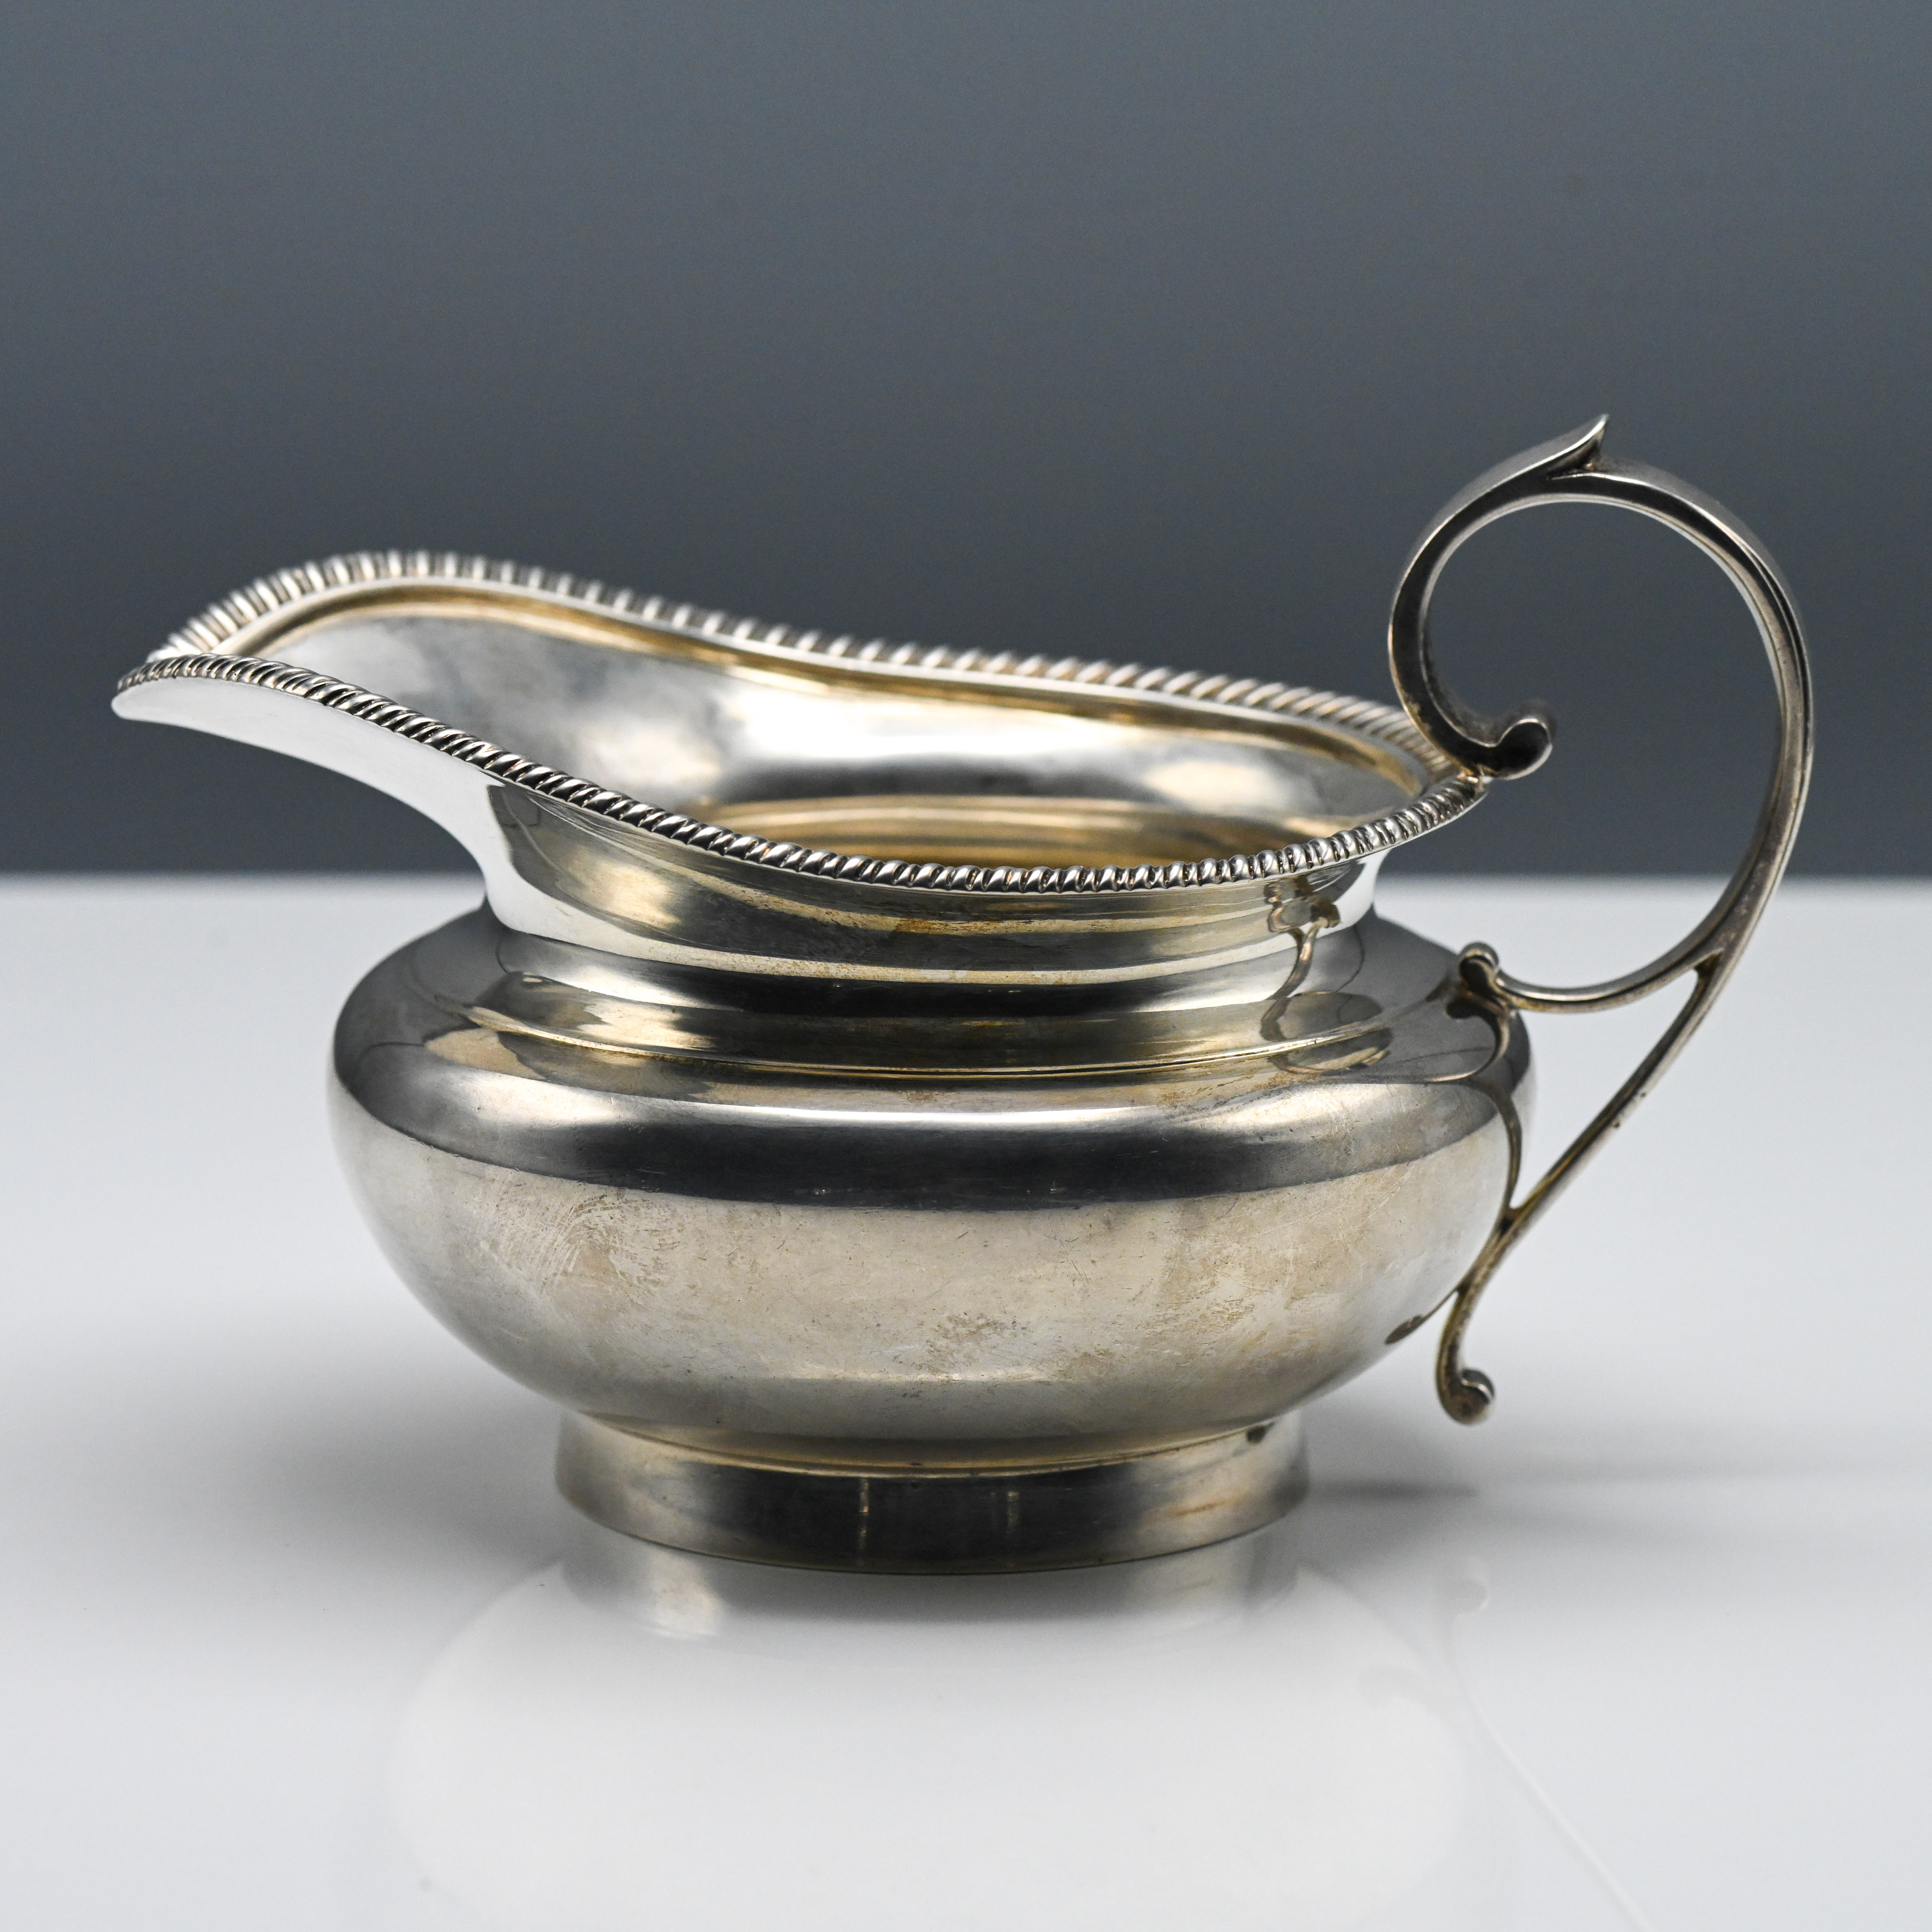 Edward VII silver cream jug, heavy gauge, bulbous design, scroll handle, London makers mark WM